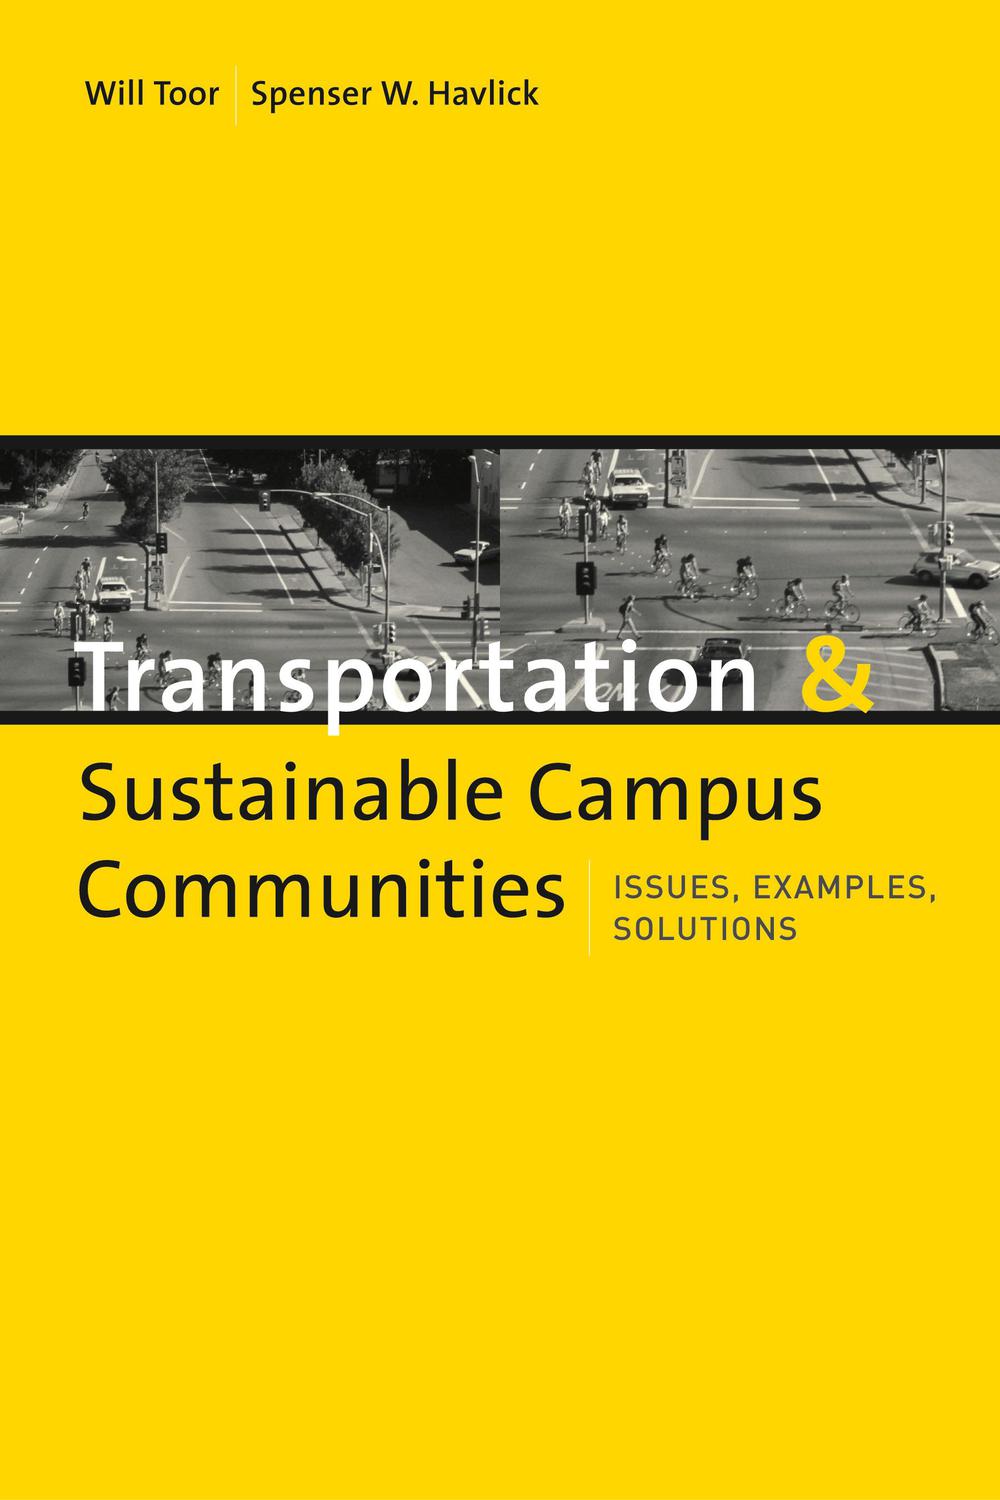 Transportation and Sustainable Campus Communities - Will Toor, Spenser Havlick